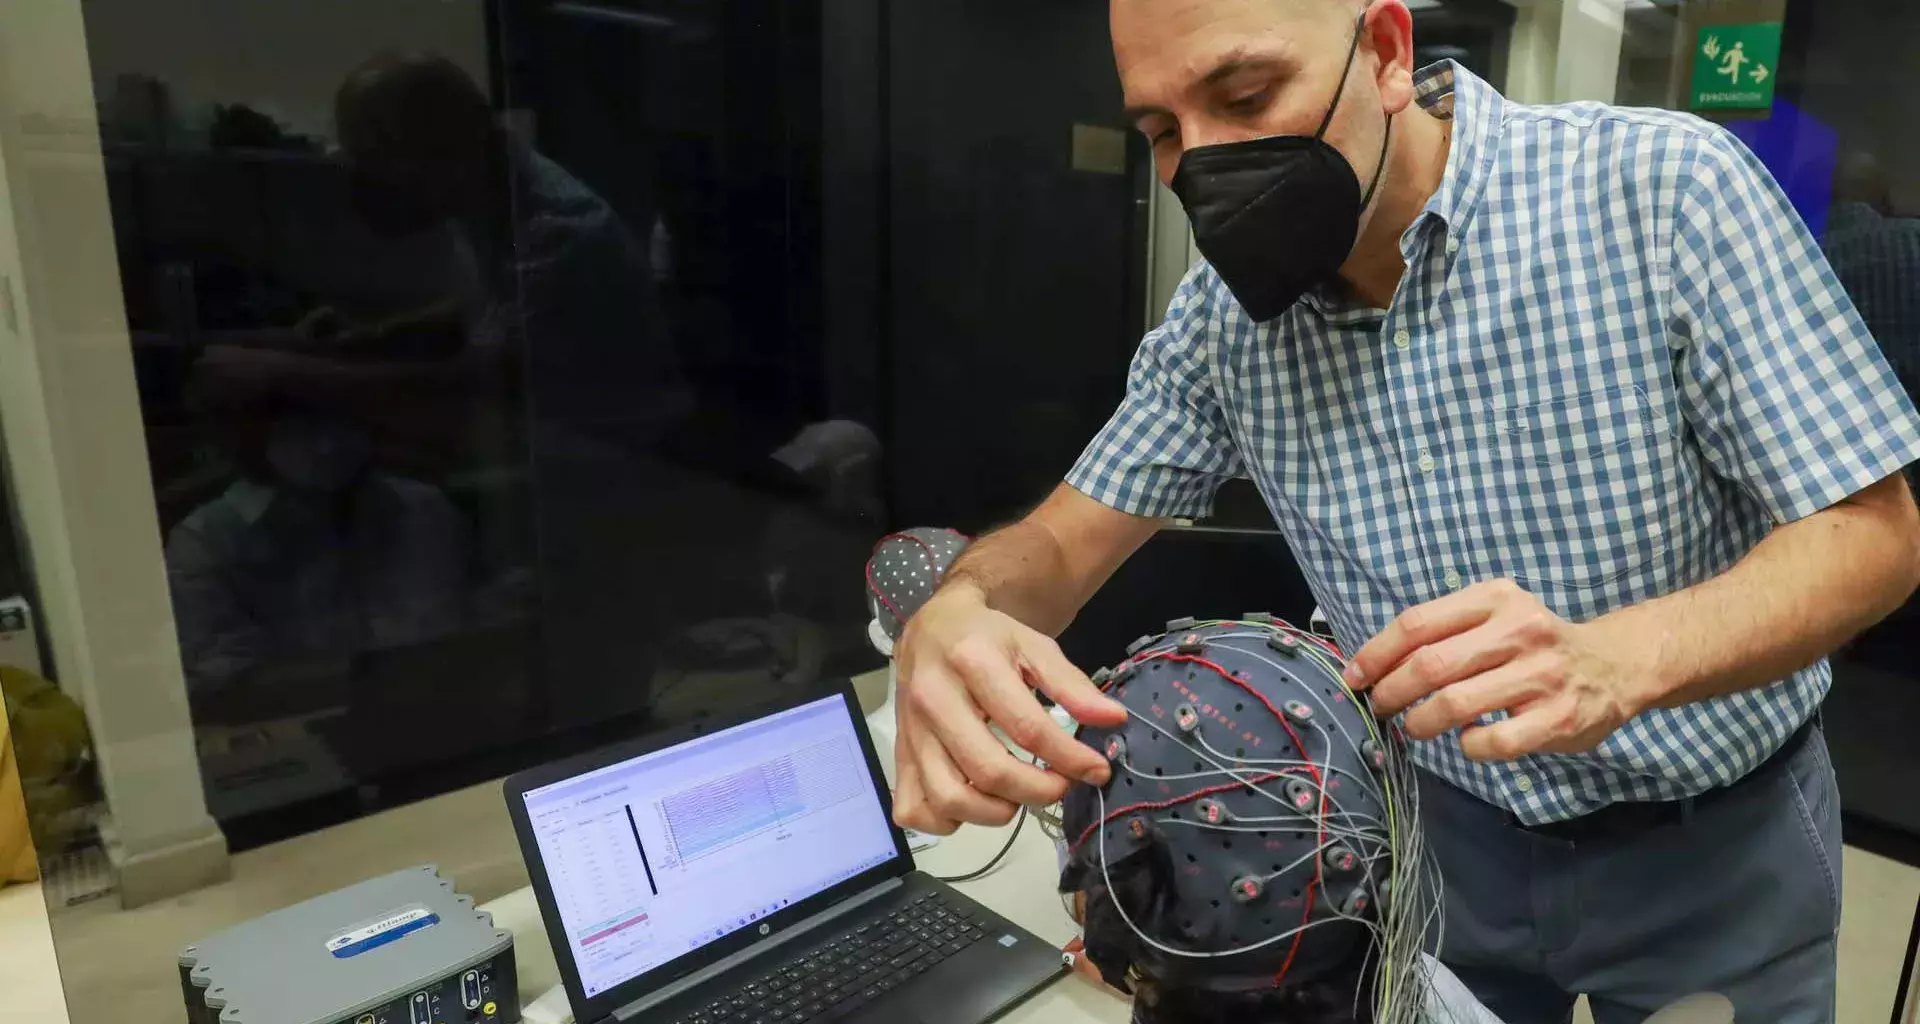 Tec researchers work on neurological decoder that reads brain signals